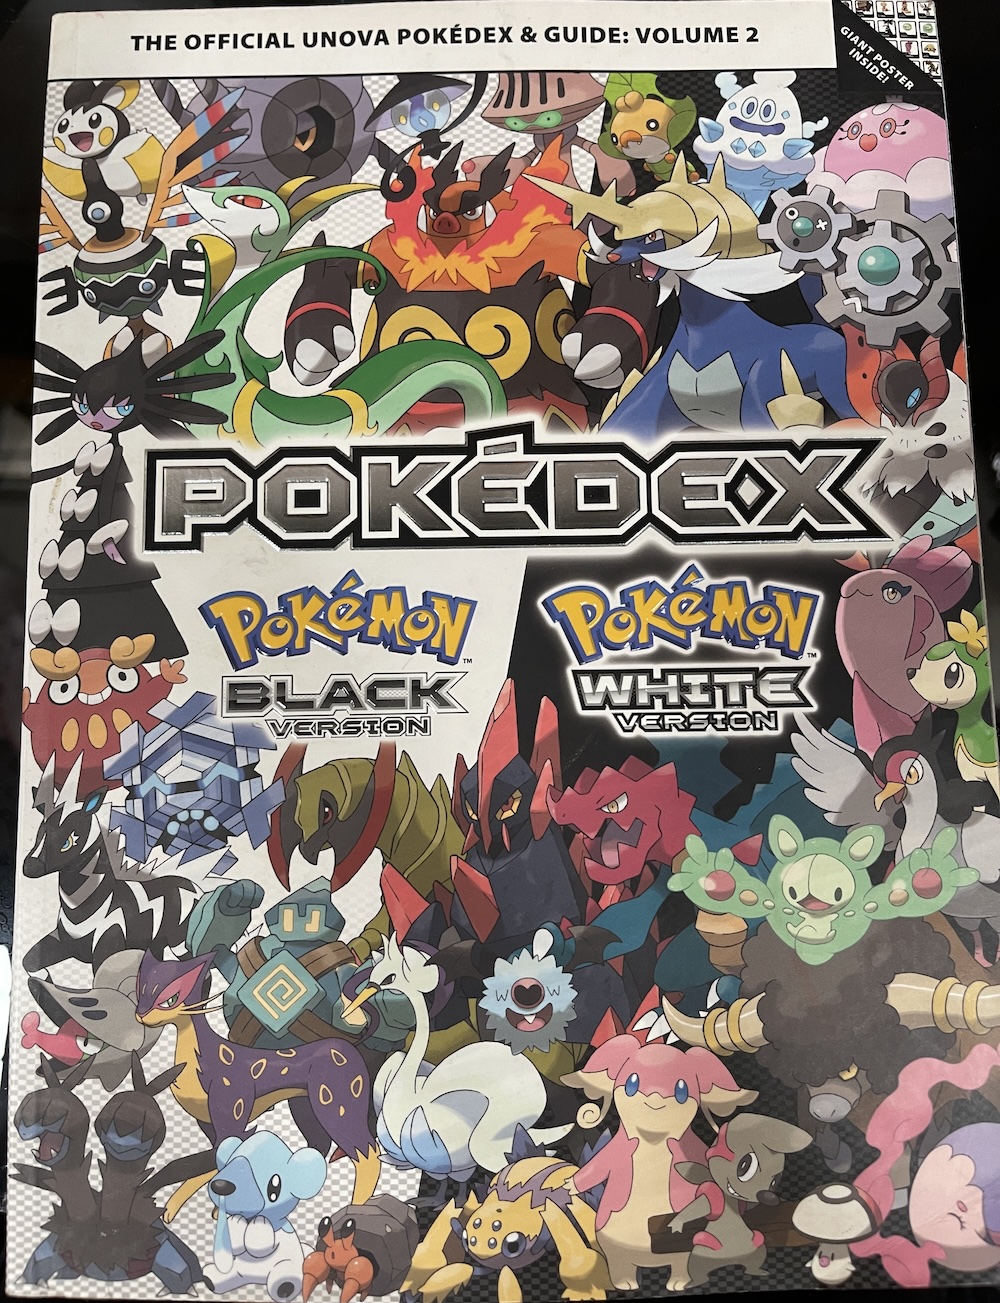 List of Pokémon by Unova Pokédex number (Black 2 and White 2